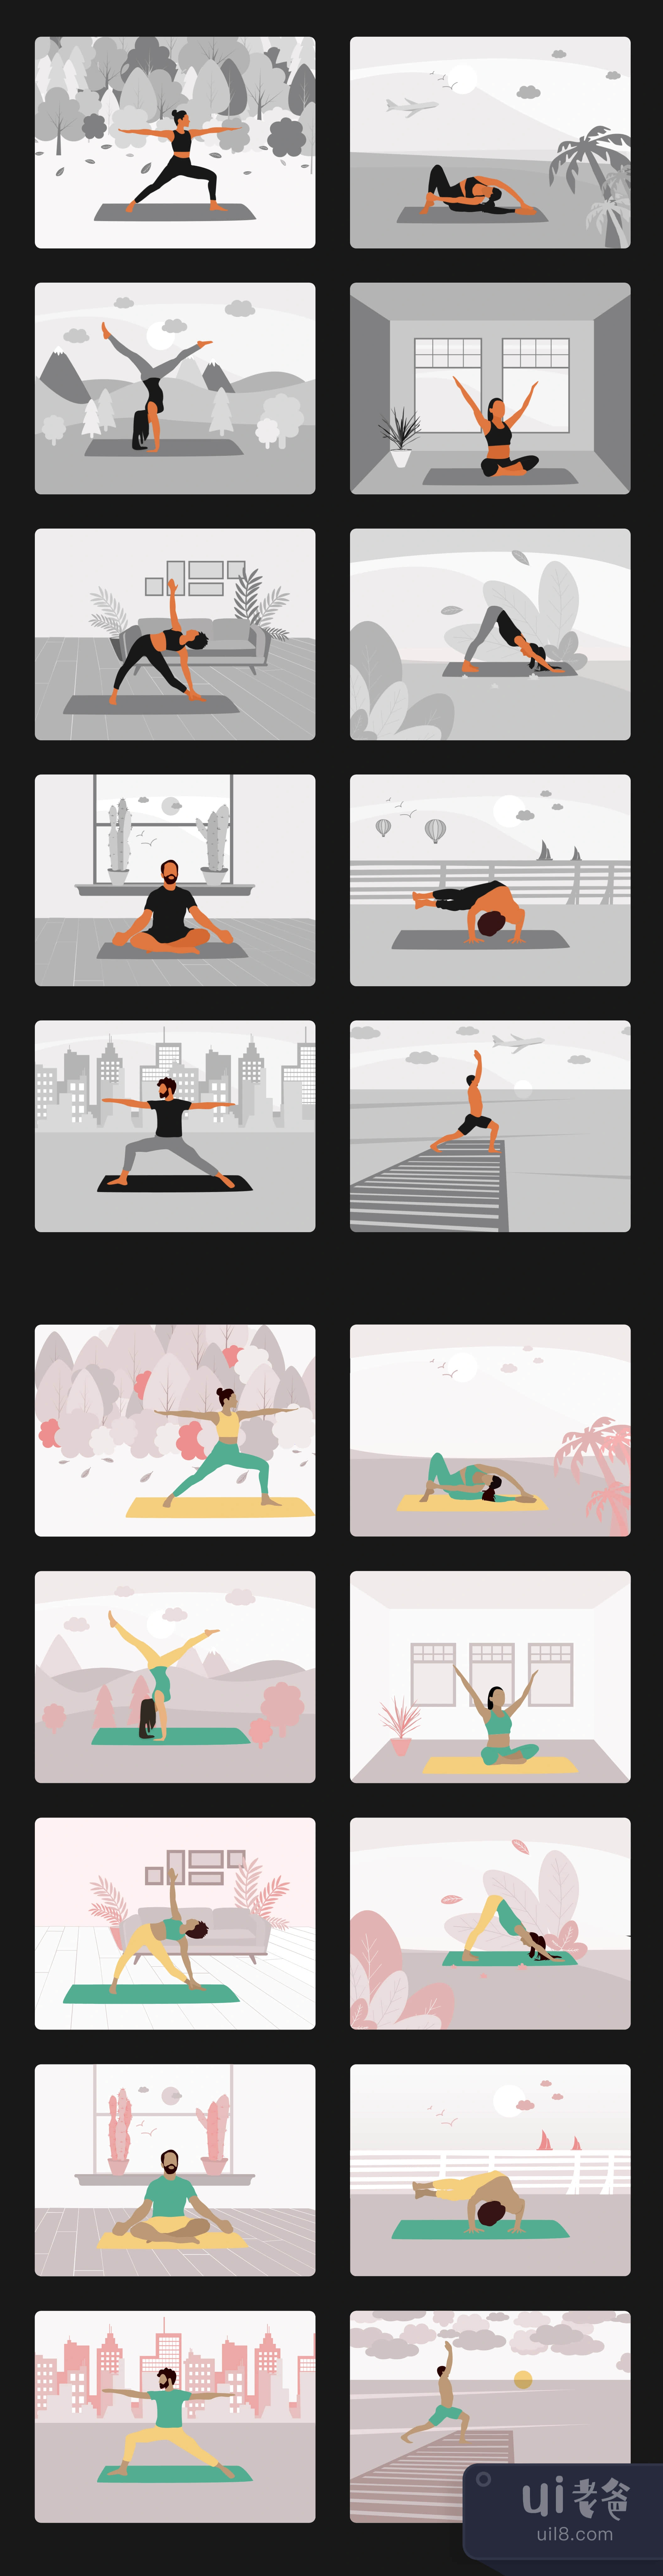 瑜伽锻炼的矢量插图--2种颜色风格 (Yoga  Workout Vector Illustrati插图